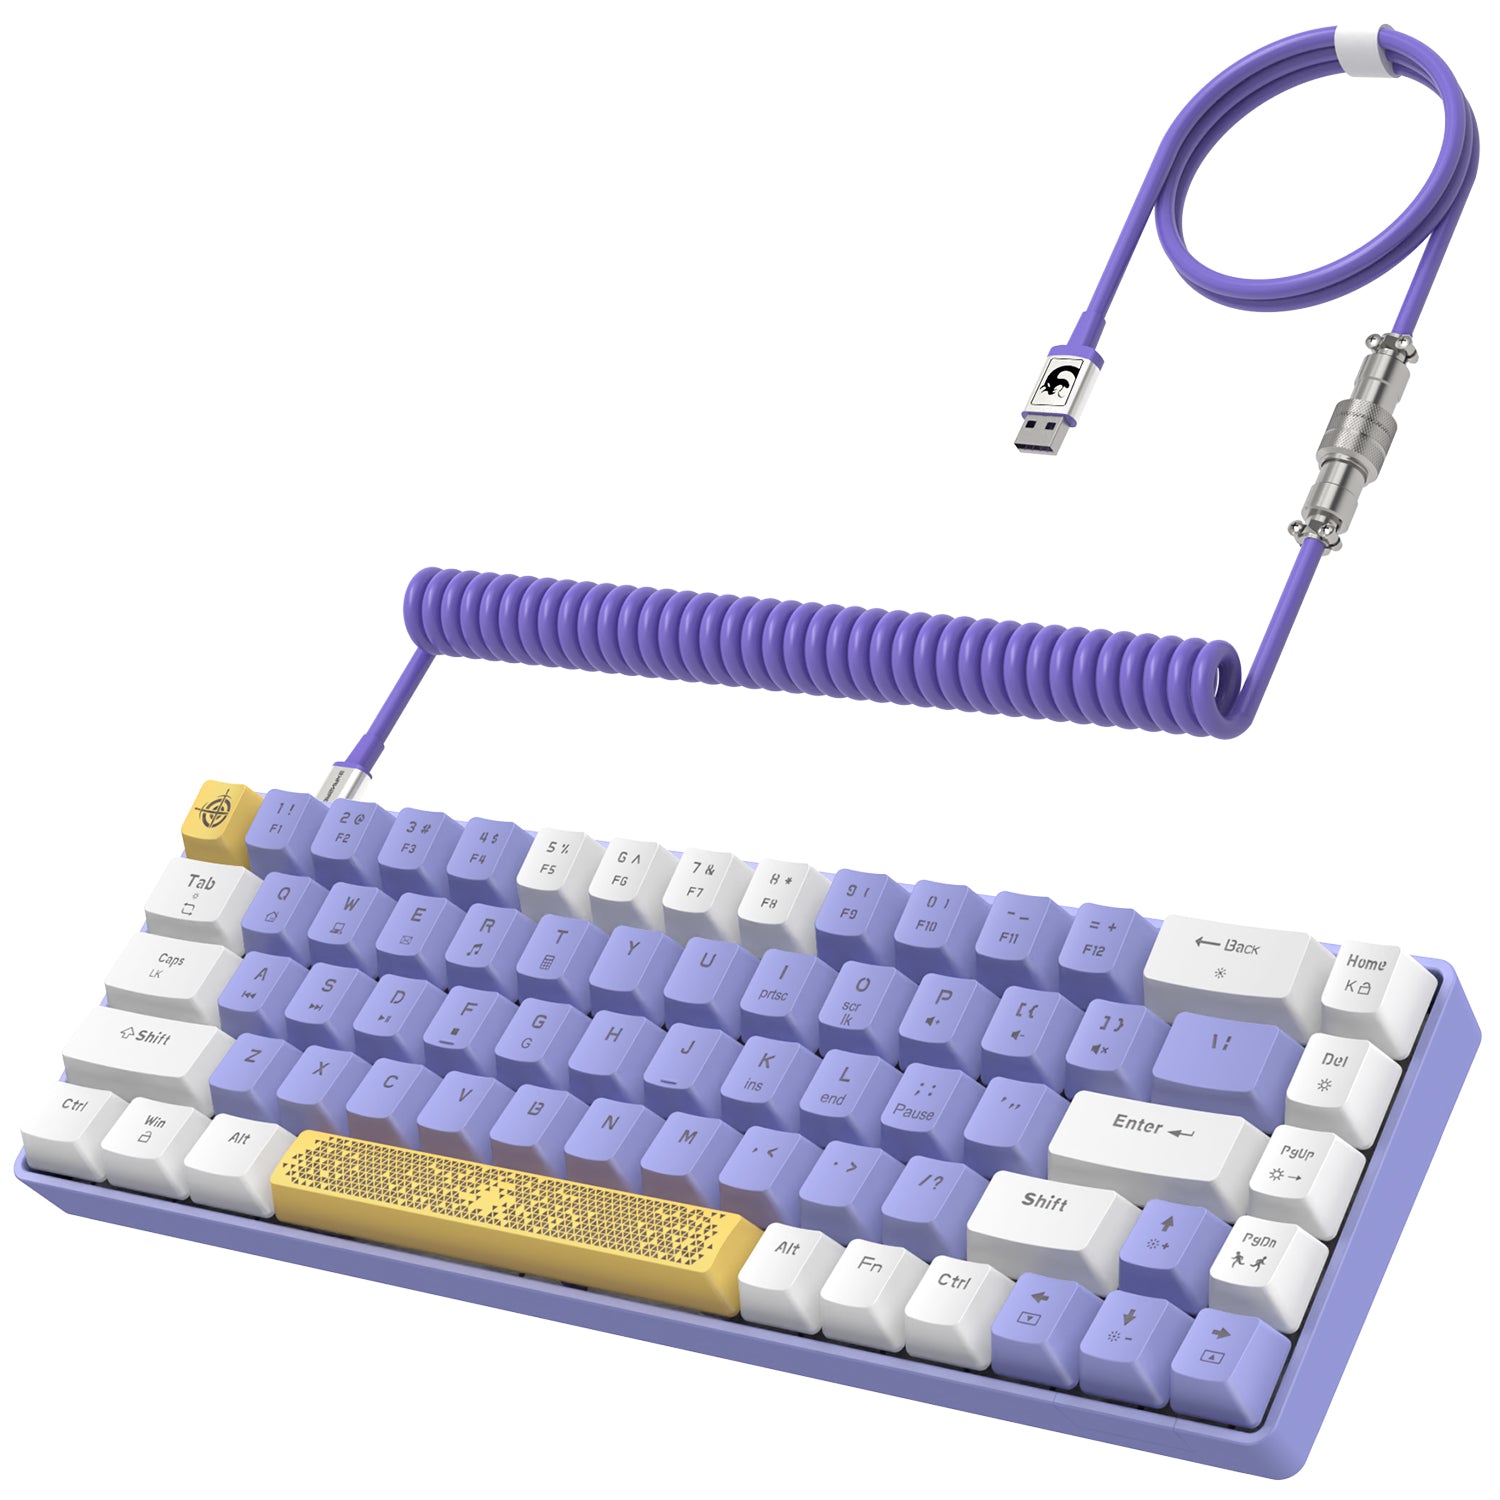 ZIYOULANG T8 60% Gaming Keyboard,68 Keys Compact Mini Wired Mechanical